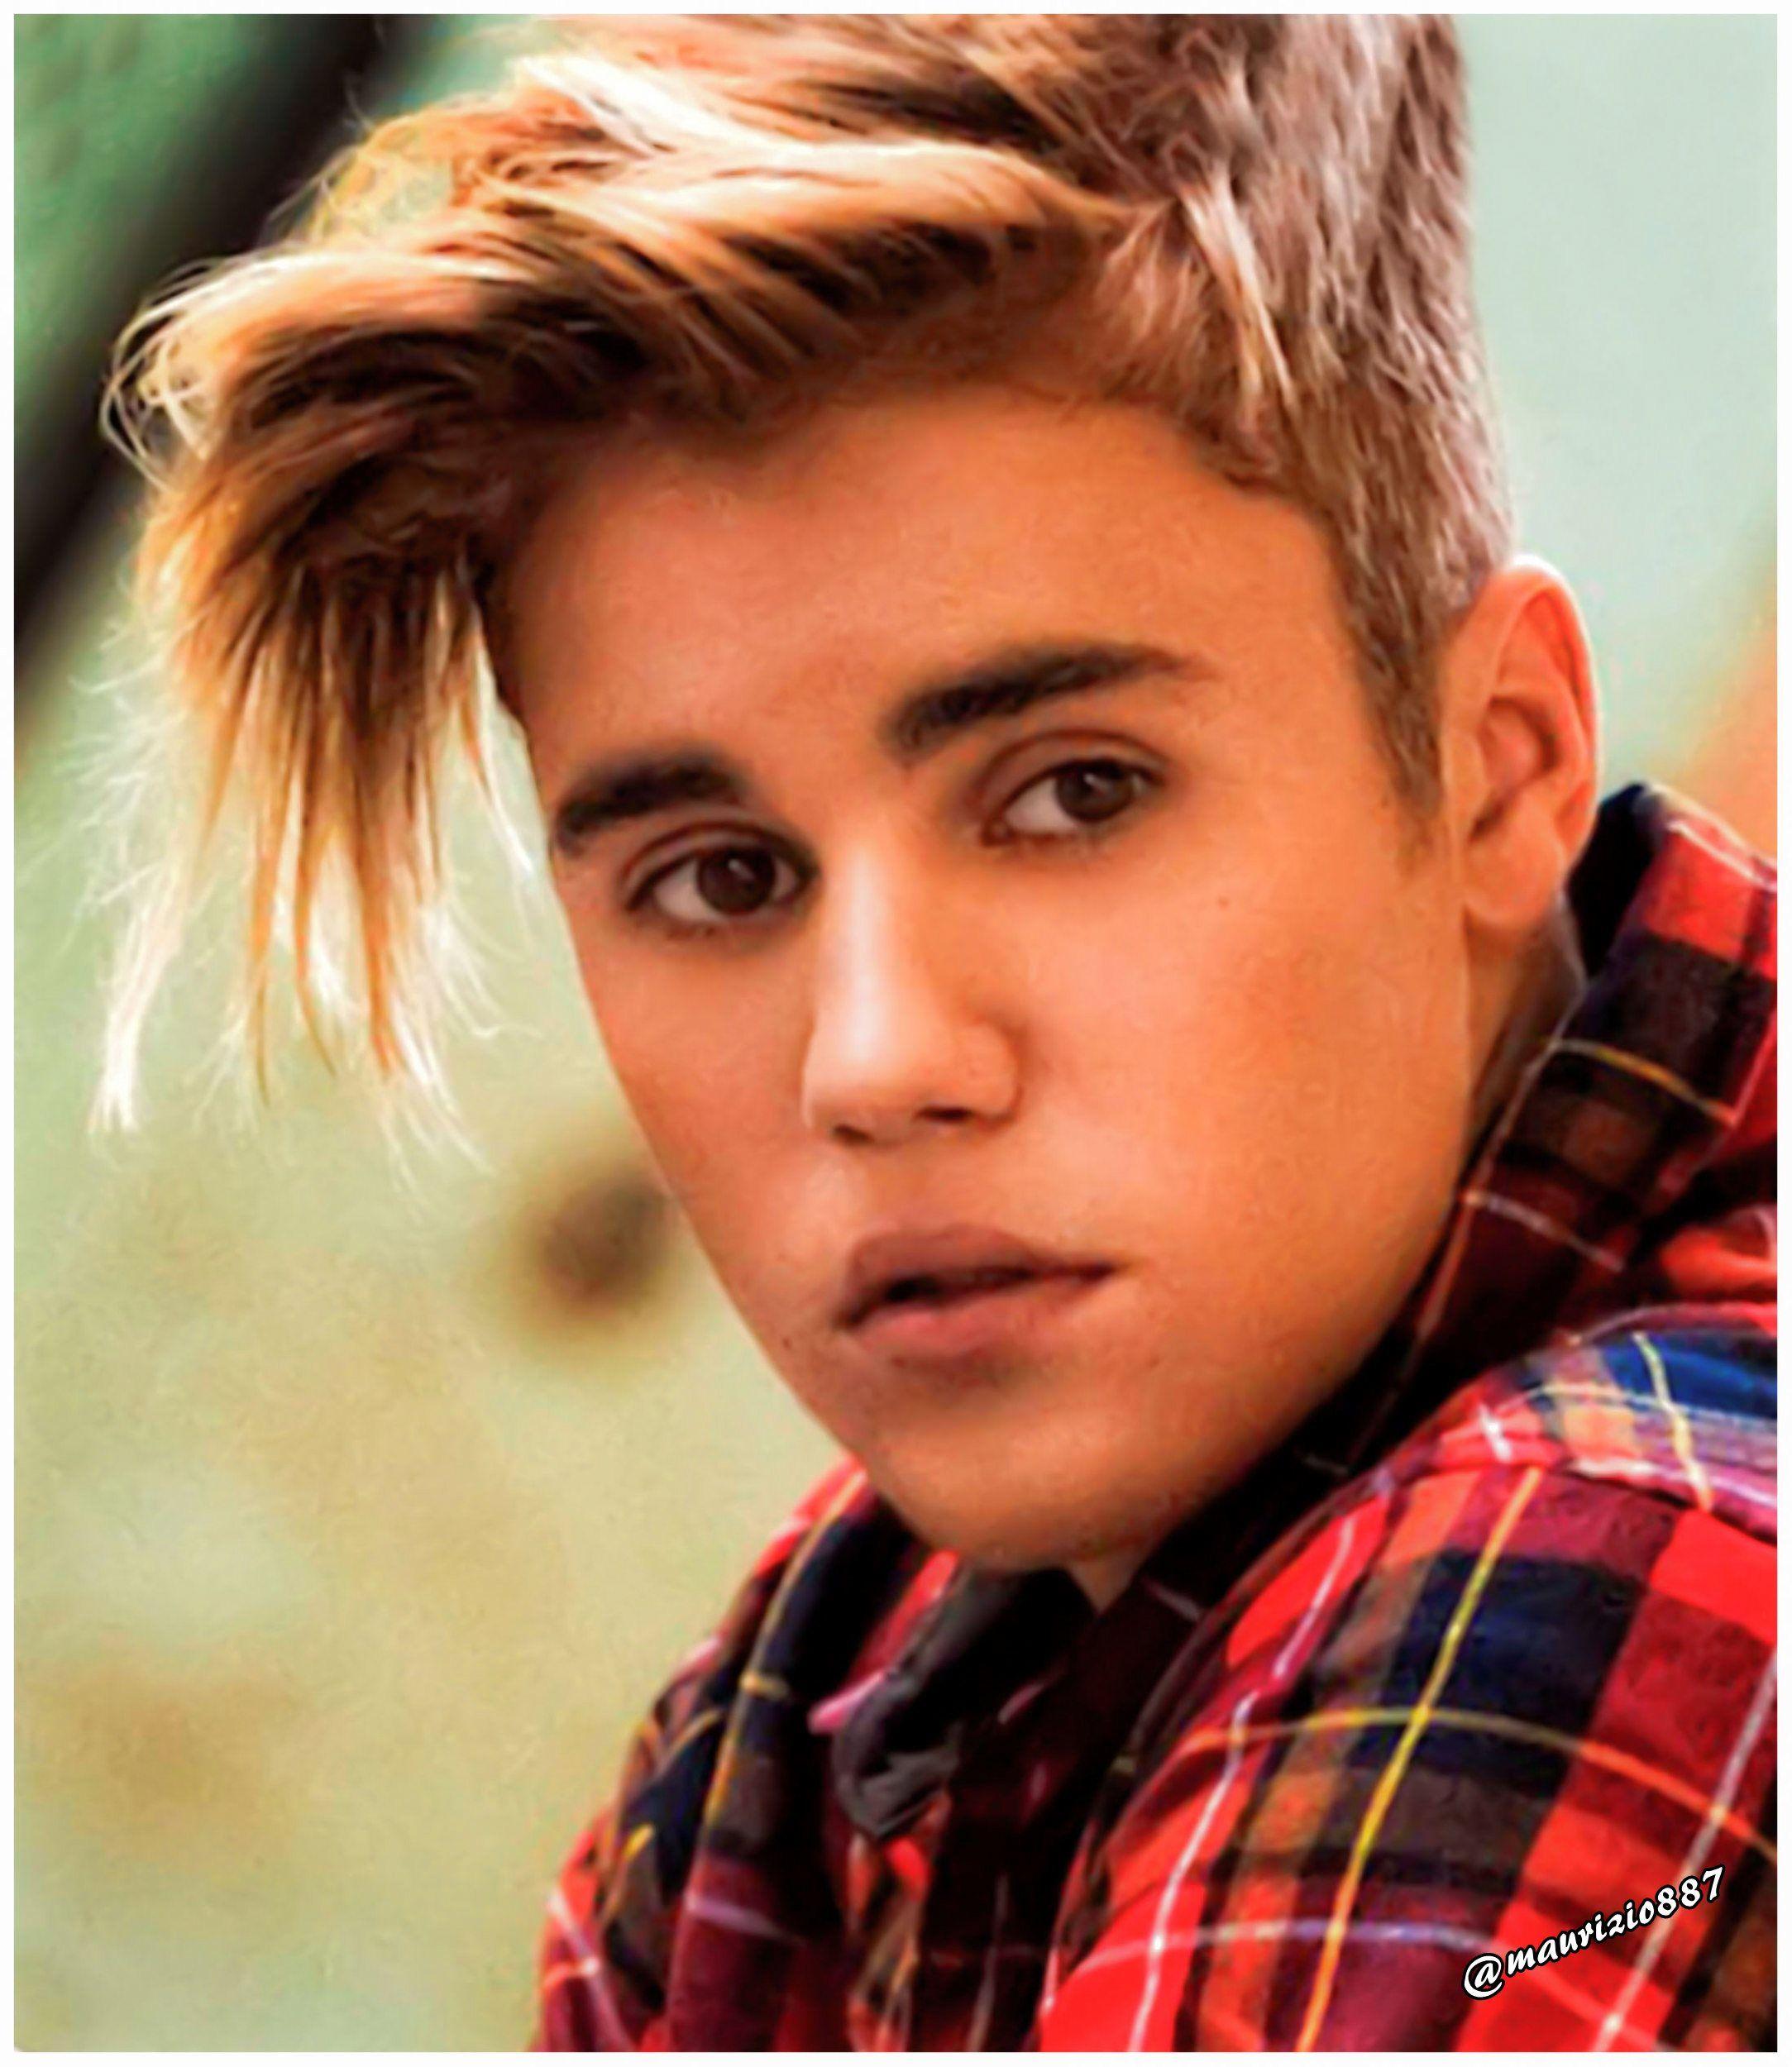 Justin Bieber Image